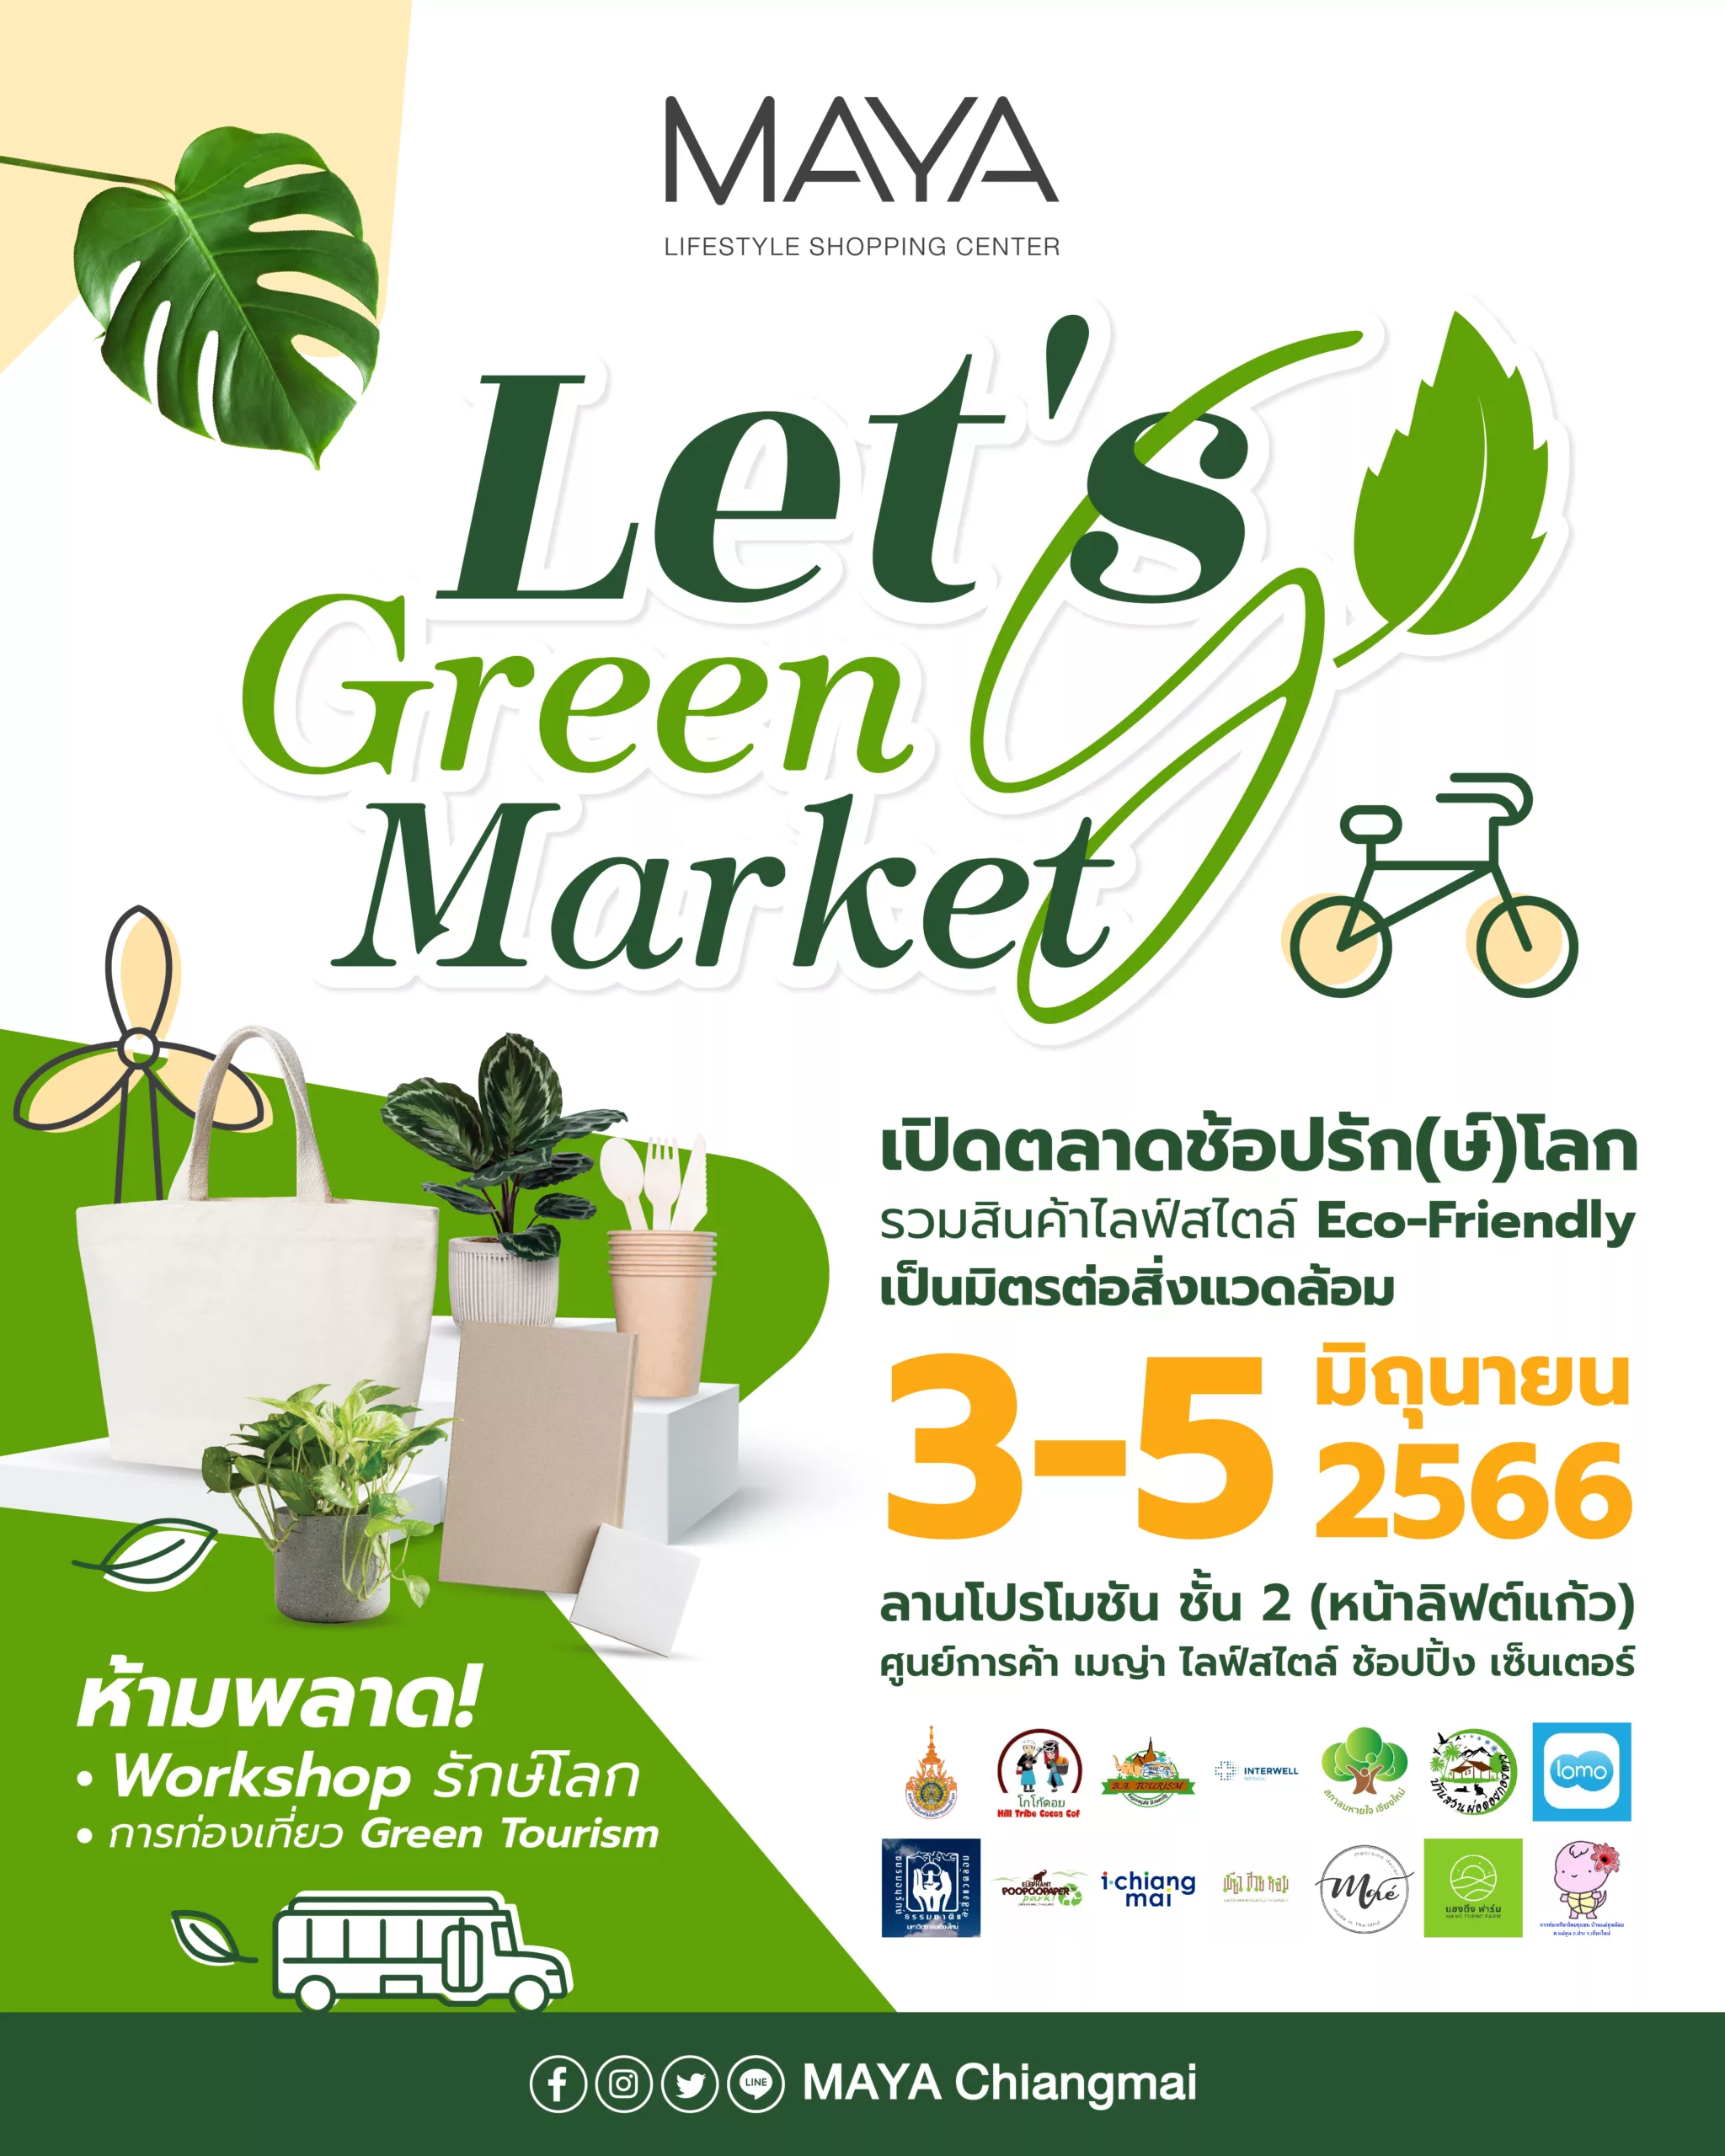 MAYA Lifestyle Shopping Mall ชวนสายรักษ์โลกห้ามพลาด! กับงาน Let’s Go Green Market รวมสินค้า Eco-Friendly และกิจกรรม Workshop สุดพิเศษ